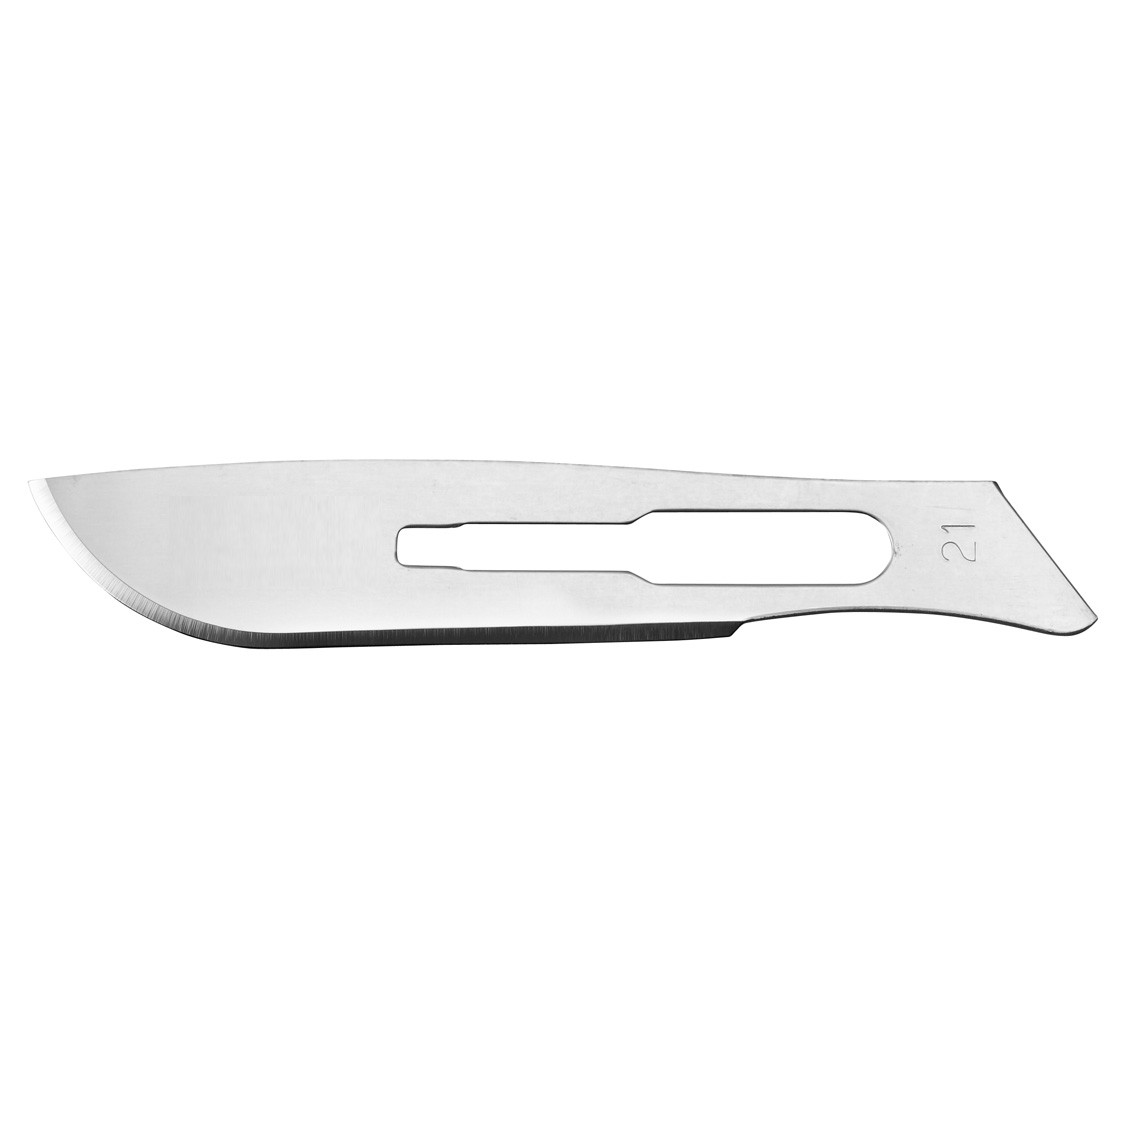 Paramount sterile single-use professional scalpel blades size 21 100 pcs